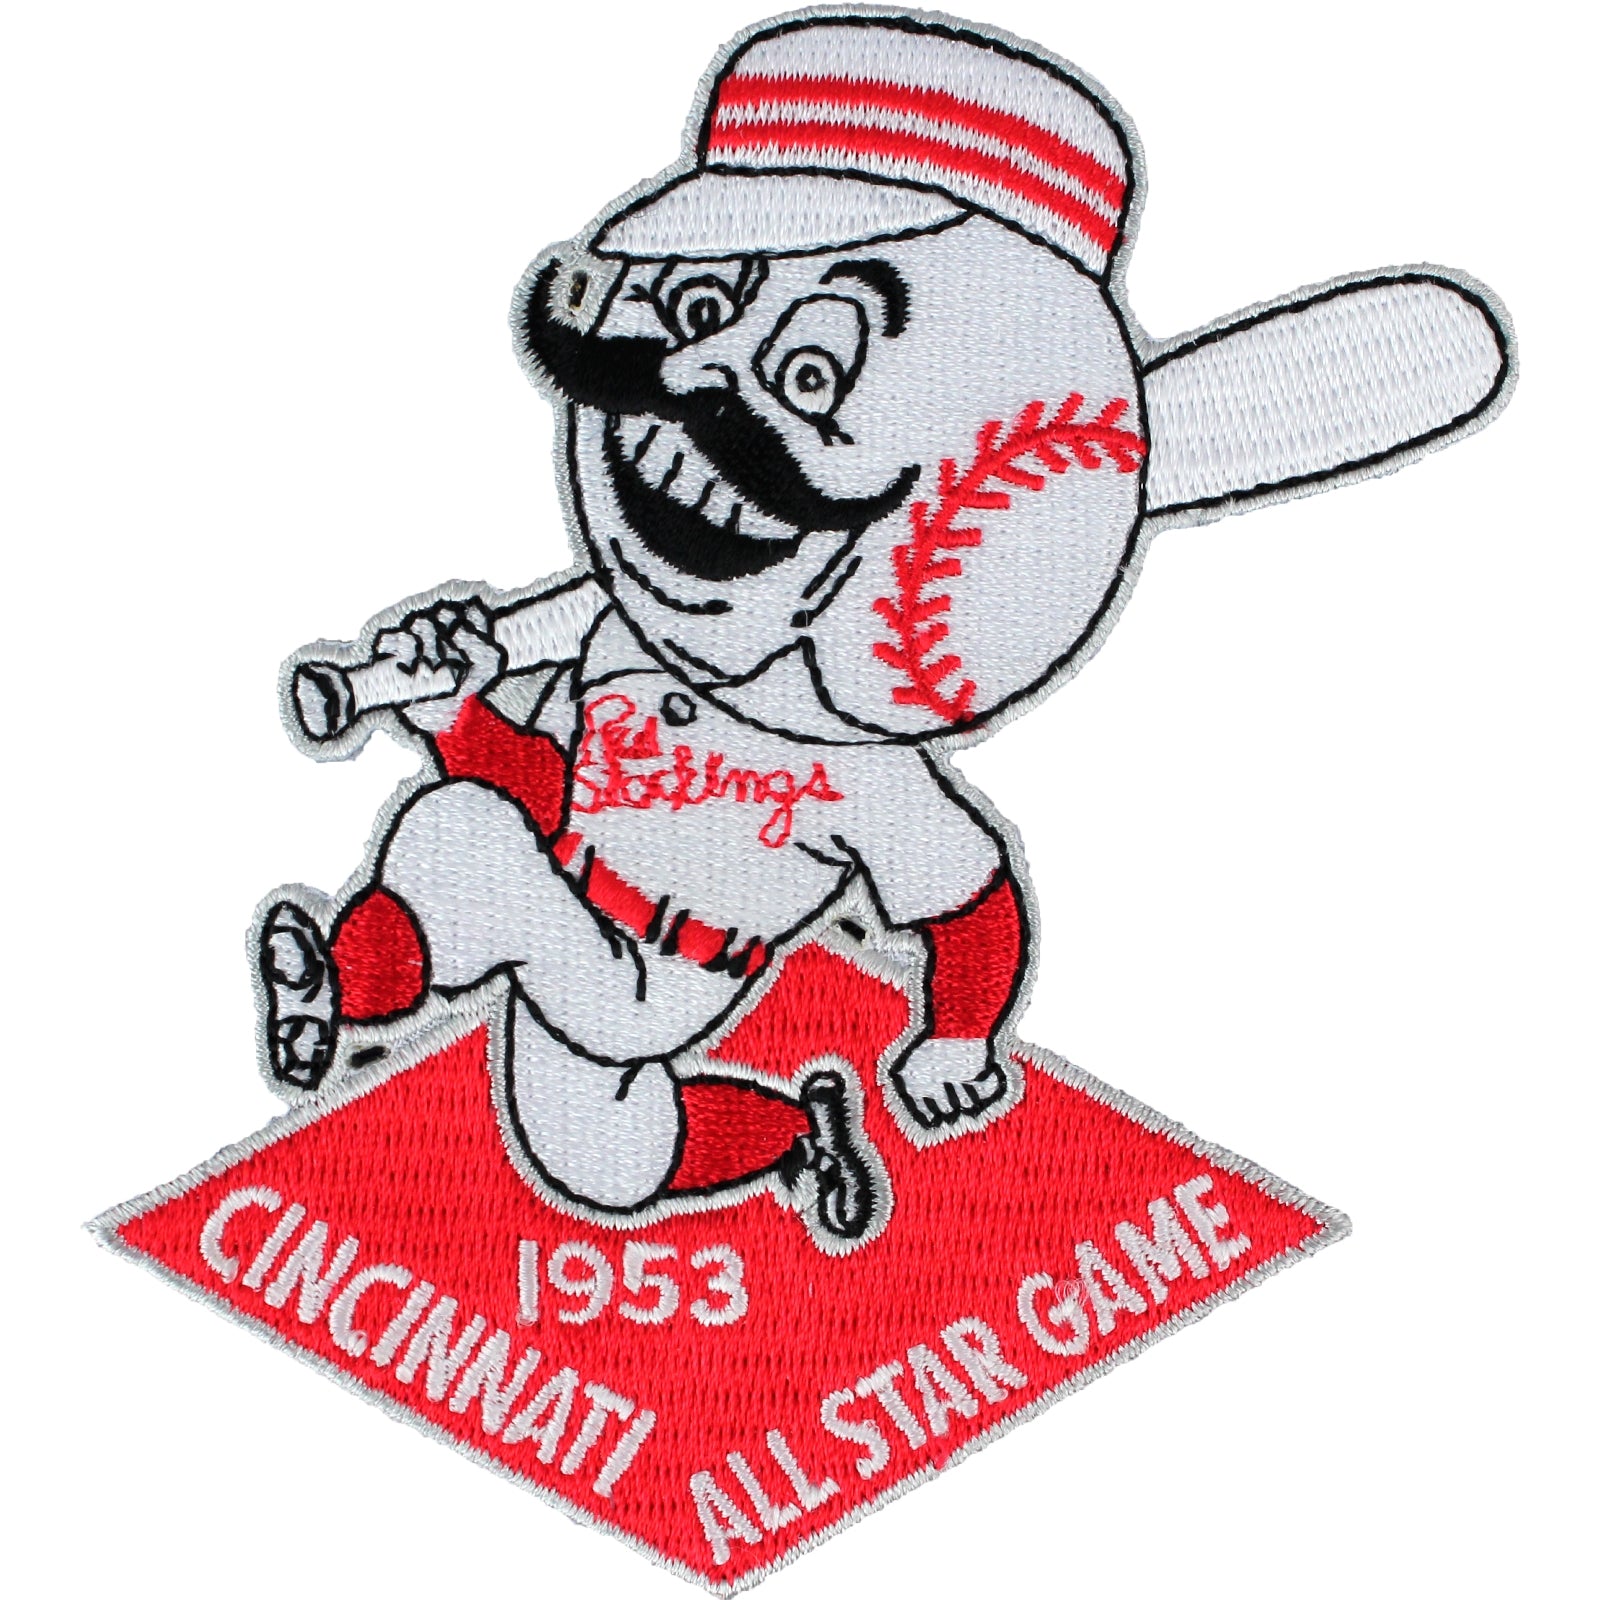 1977 ERA CINCINNATI REDS MLB BASEBALL VINTAGE 3 ROUND TEAM LOGO PATCH